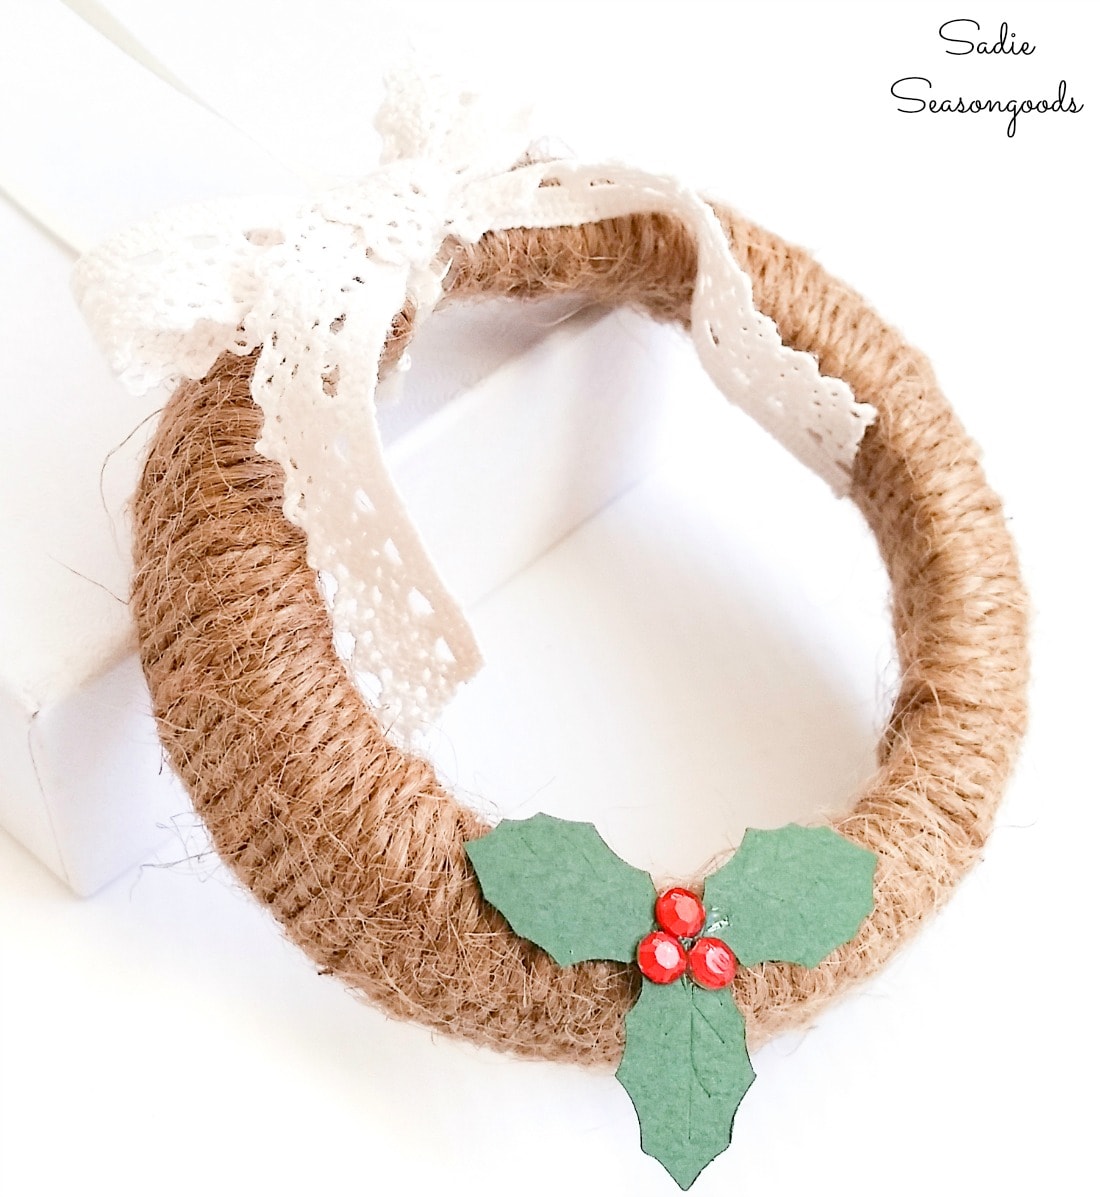 Mini wreath ornament for a Farmhouse Christmas tree